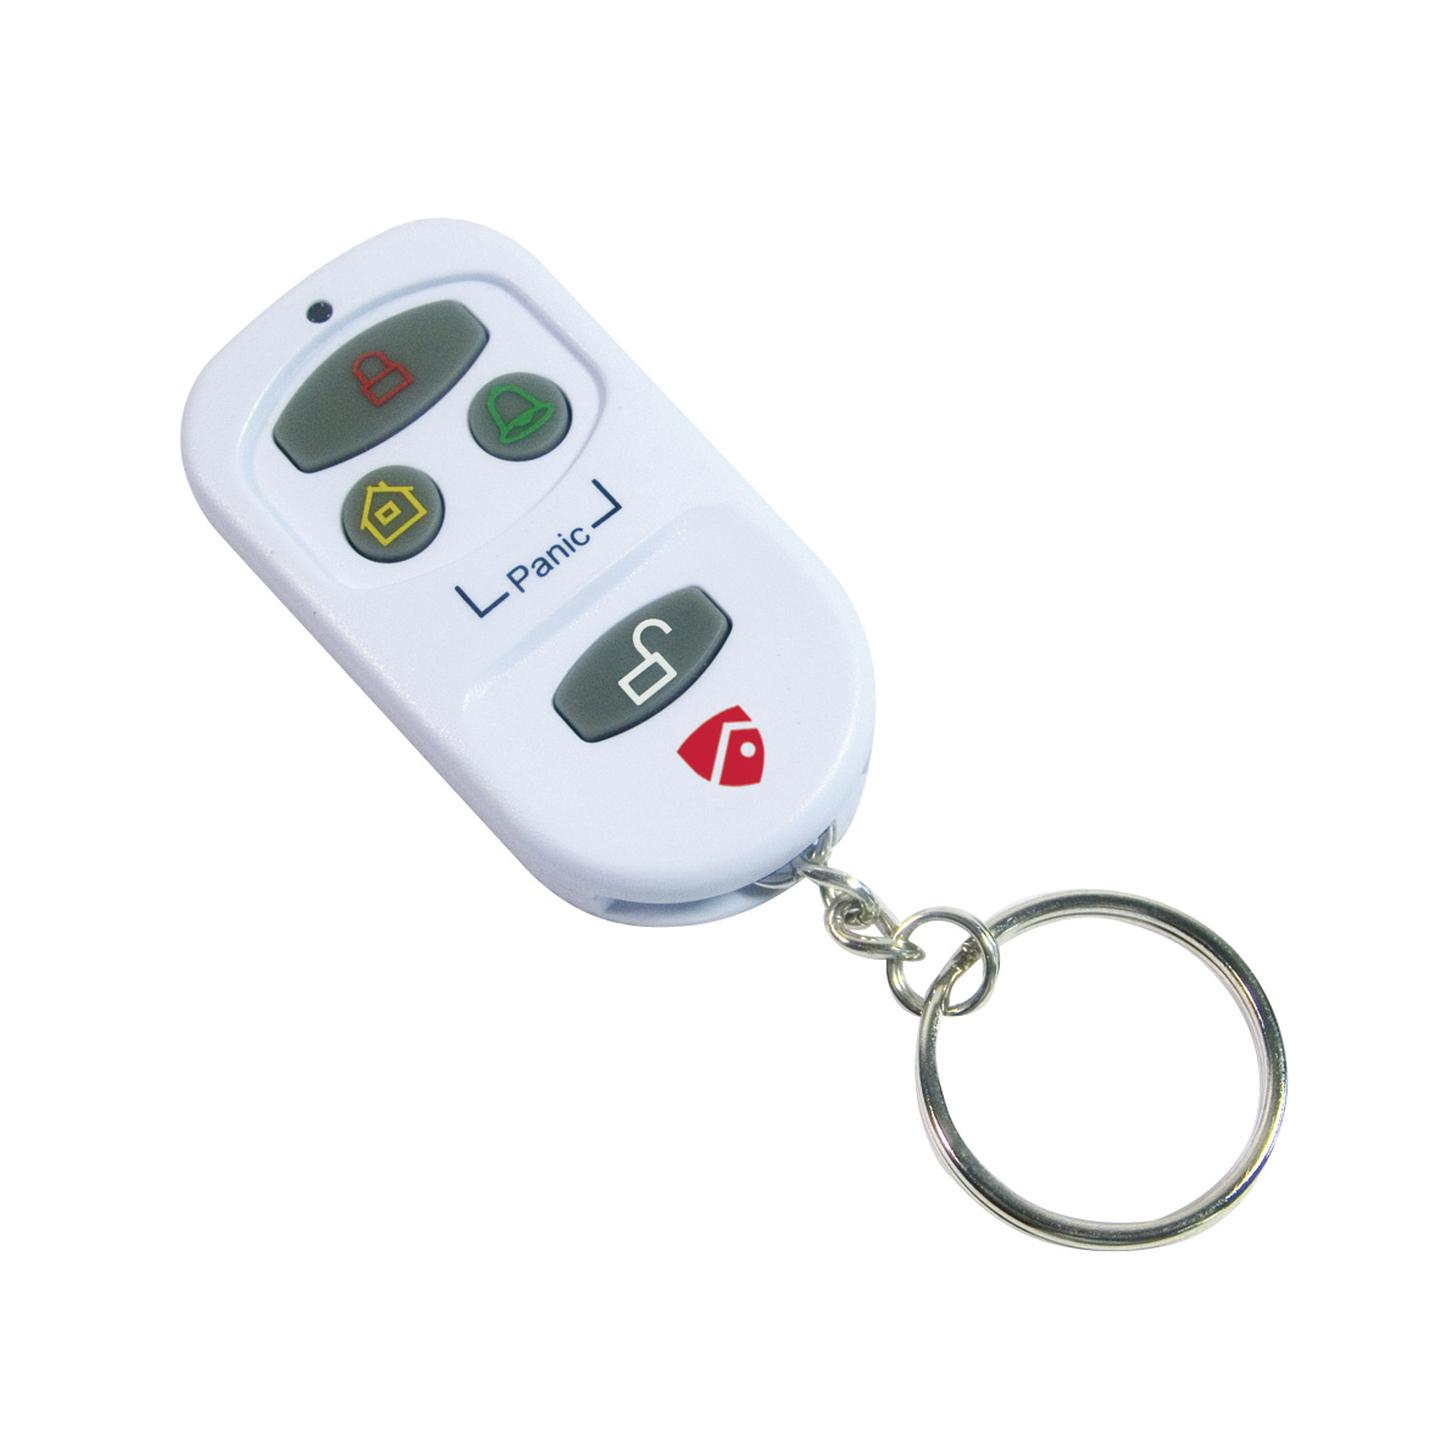 Spare Wireless Keyfob Remote to Suit LA5280/82/84/90